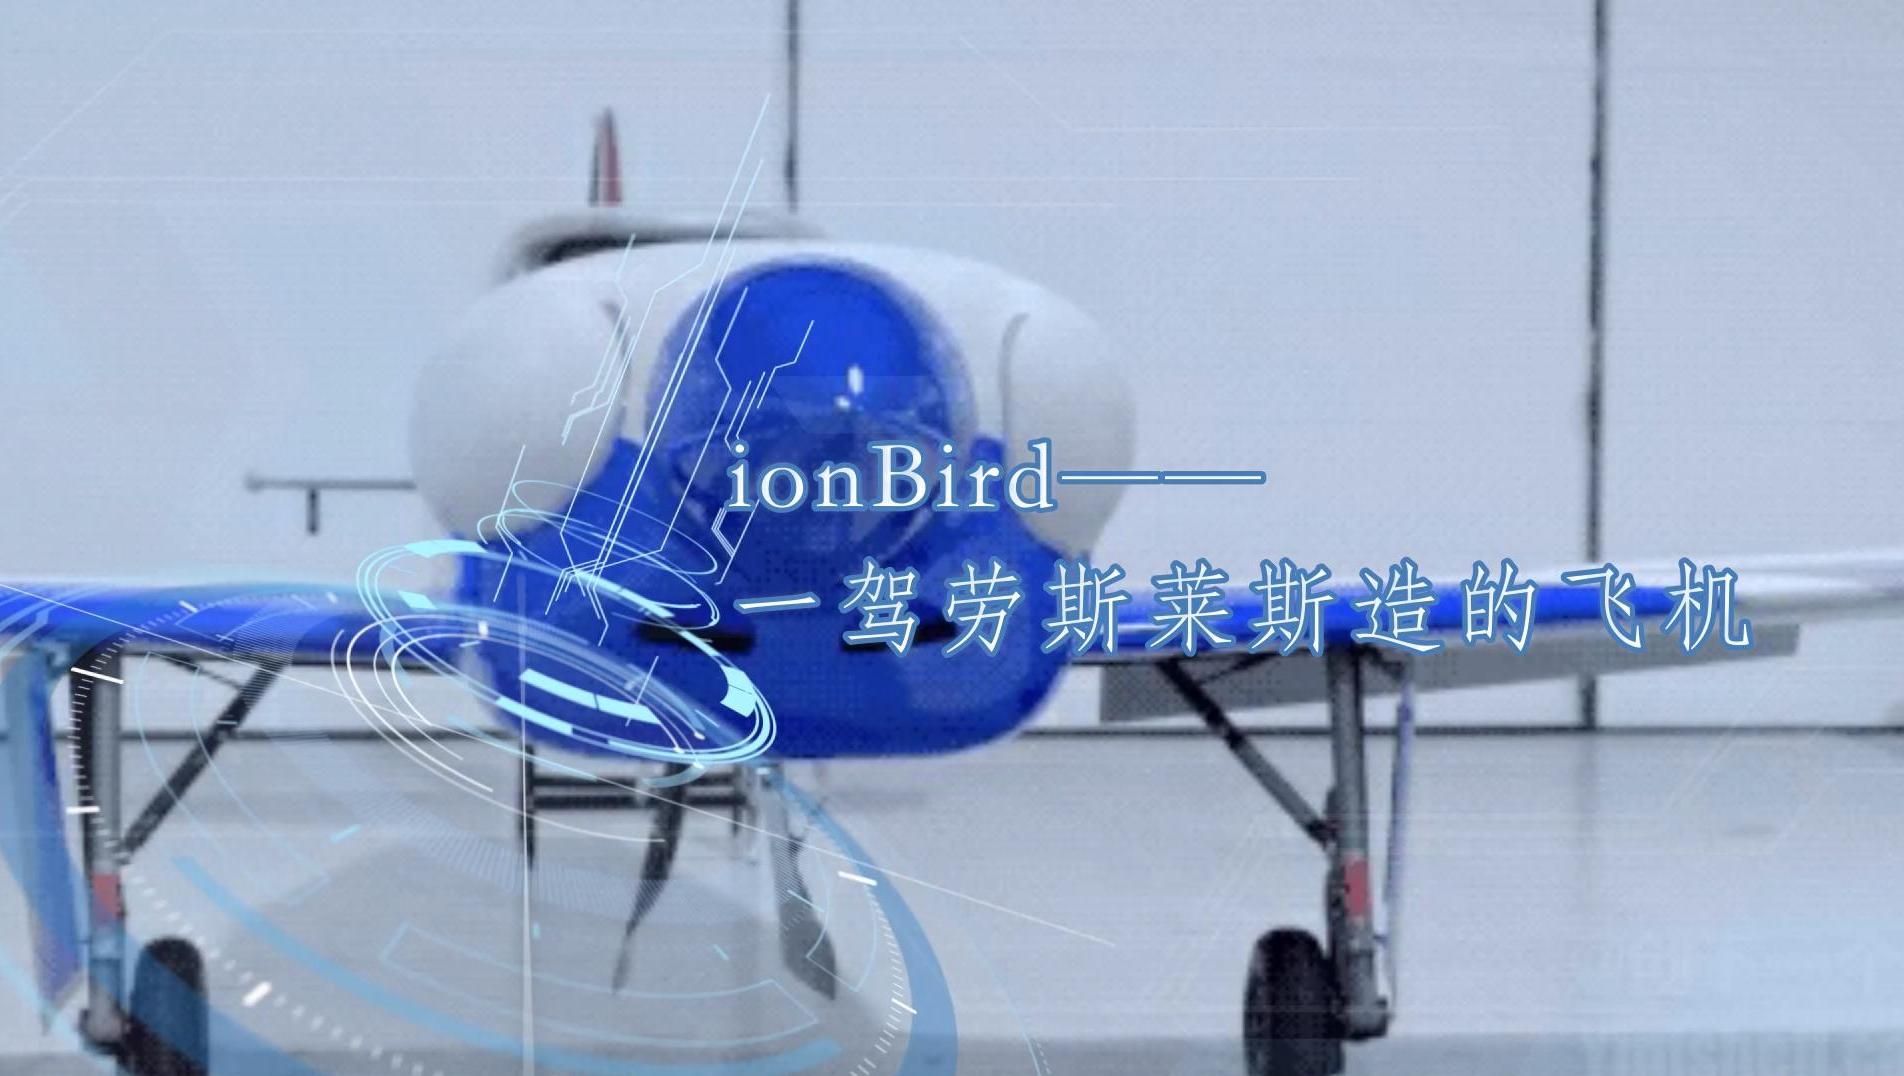 ionBird：一架劳斯莱斯造的飞机